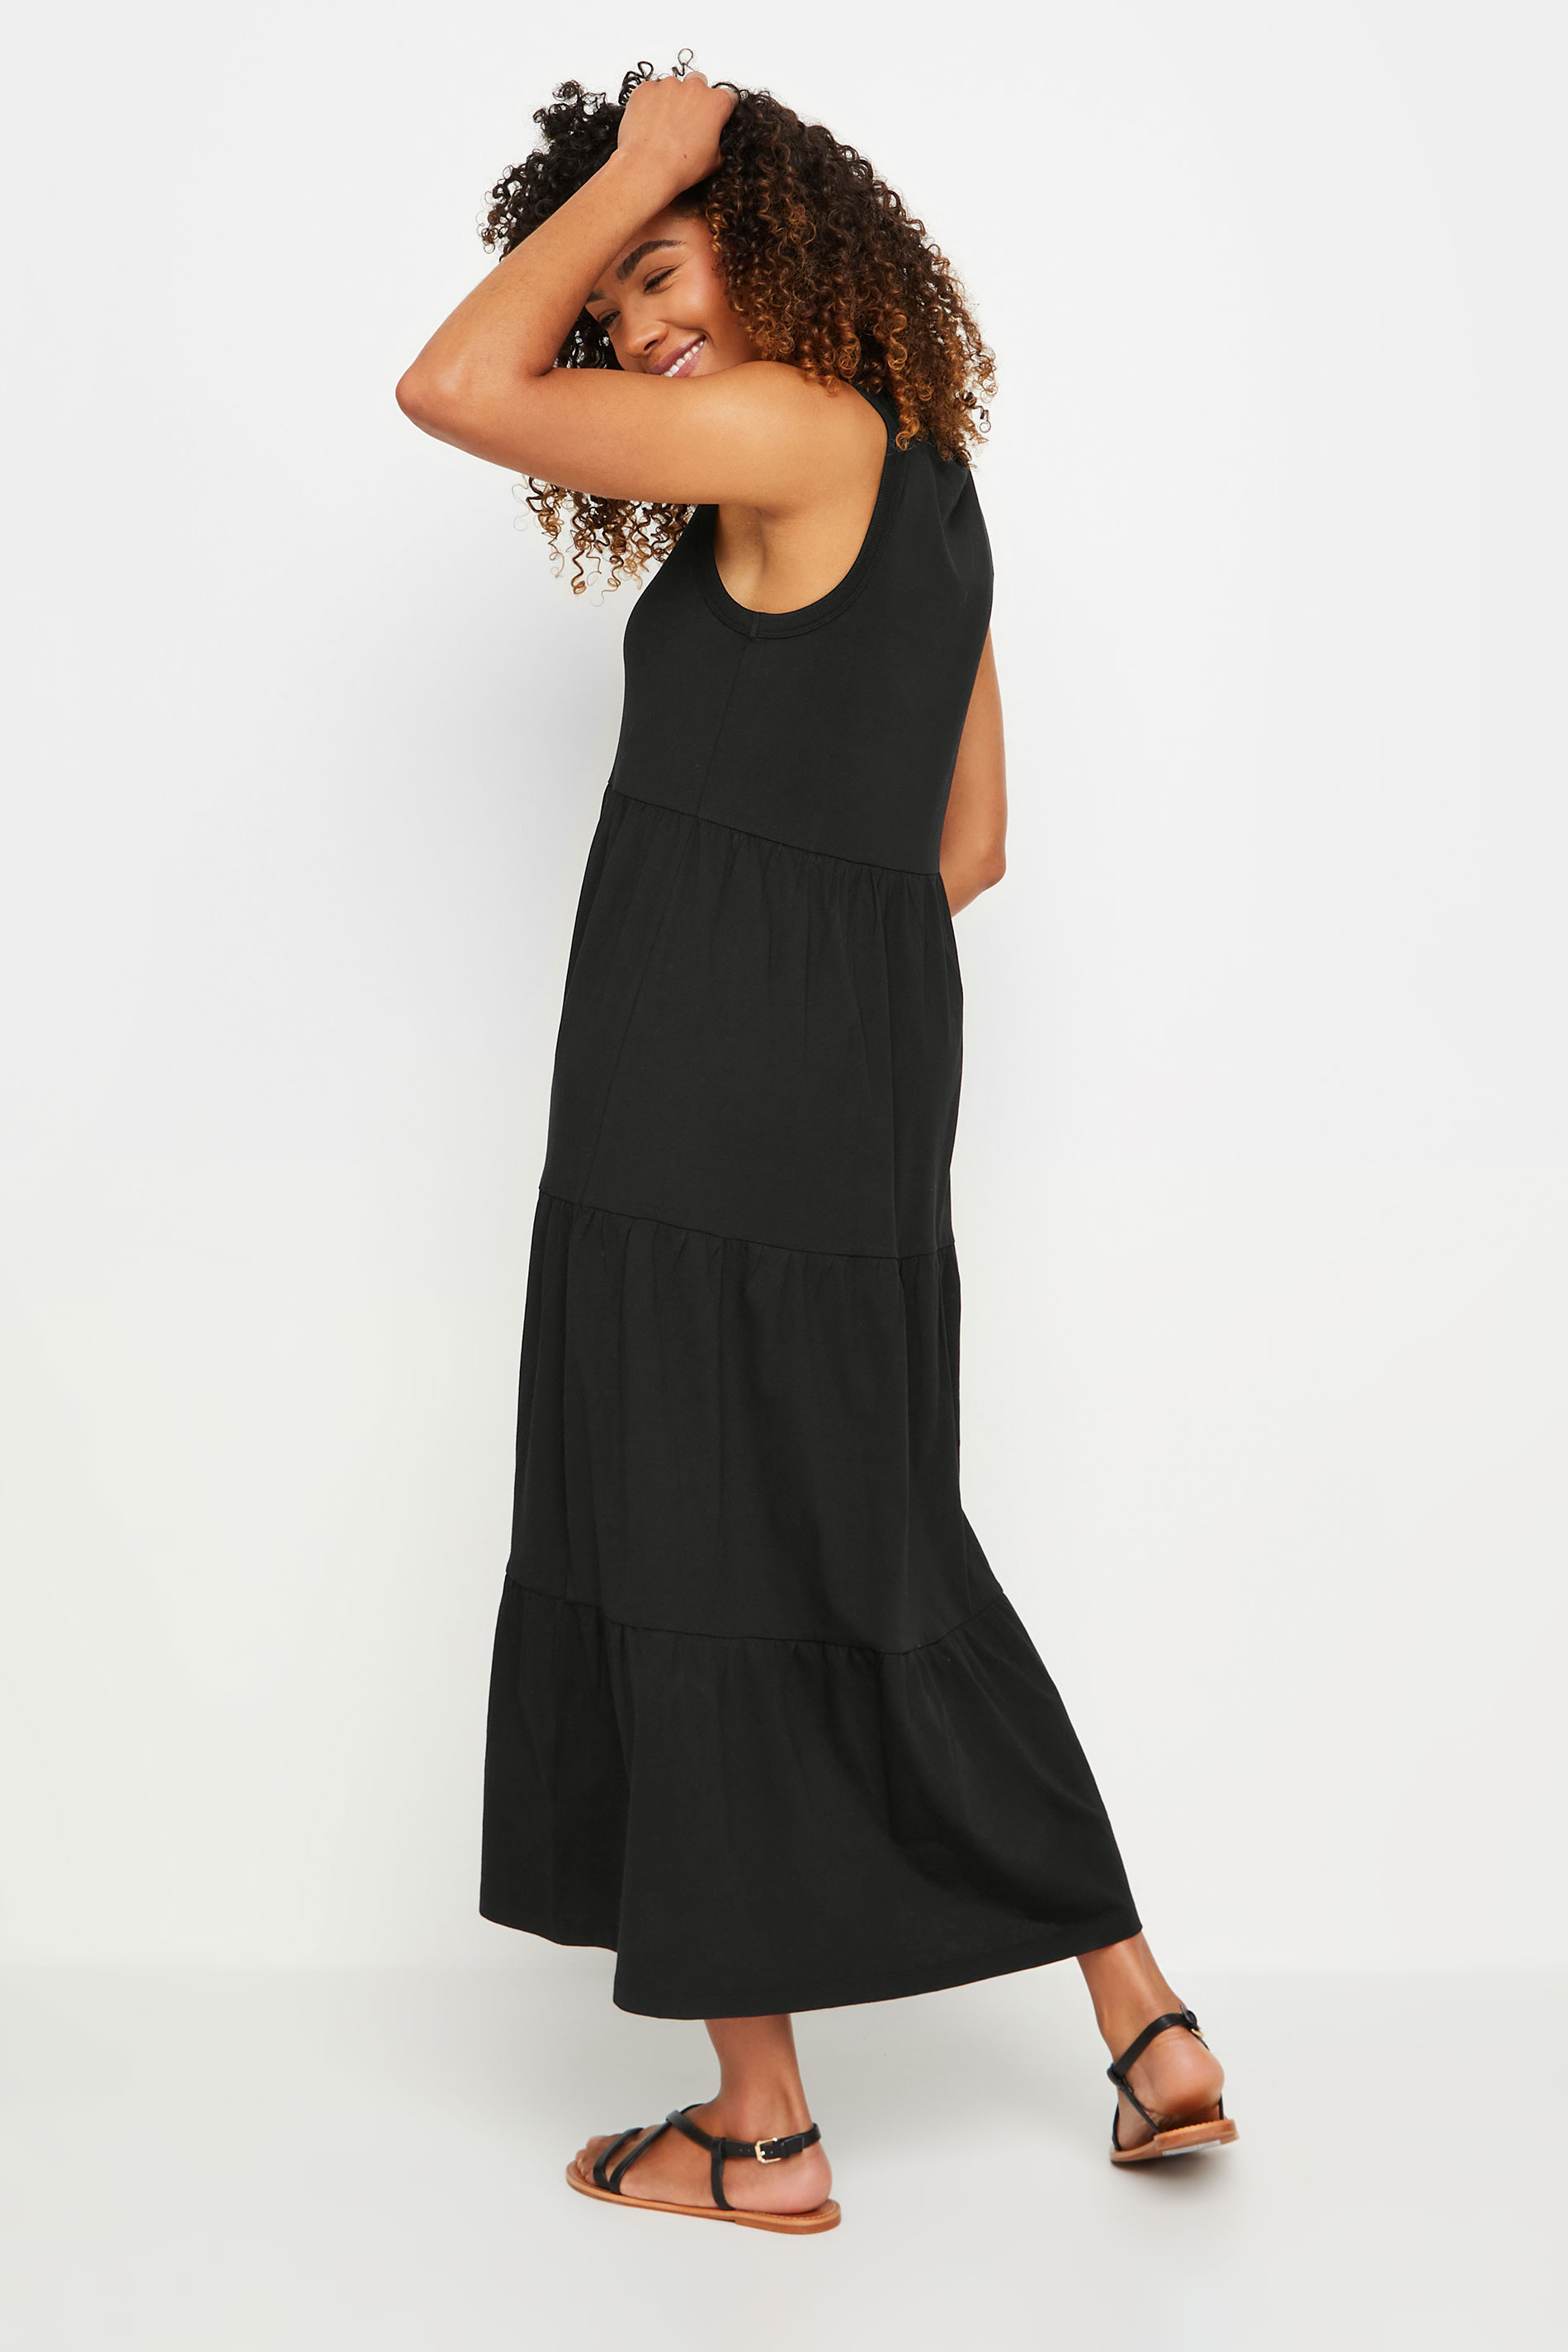 M&Co Black Sleeveless Tiered Cotton Maxi Dress | M&Co 3